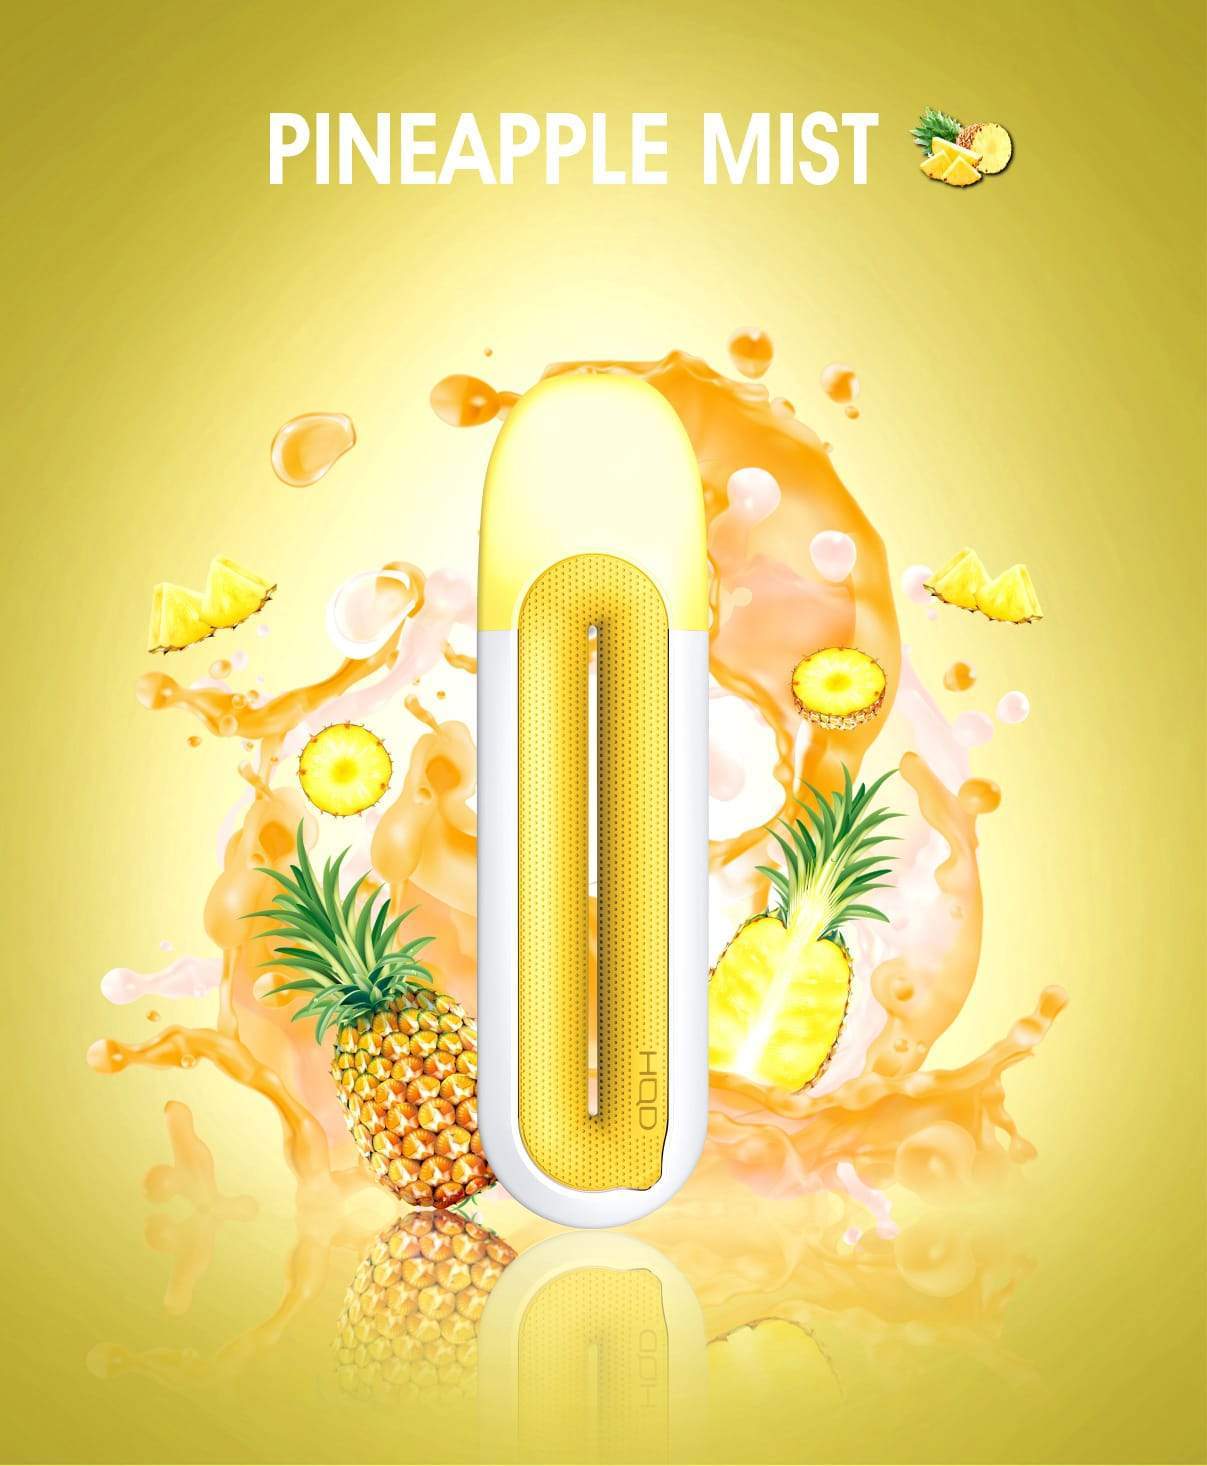 HQD Rosy - Pineapple Mist - yummystig.com